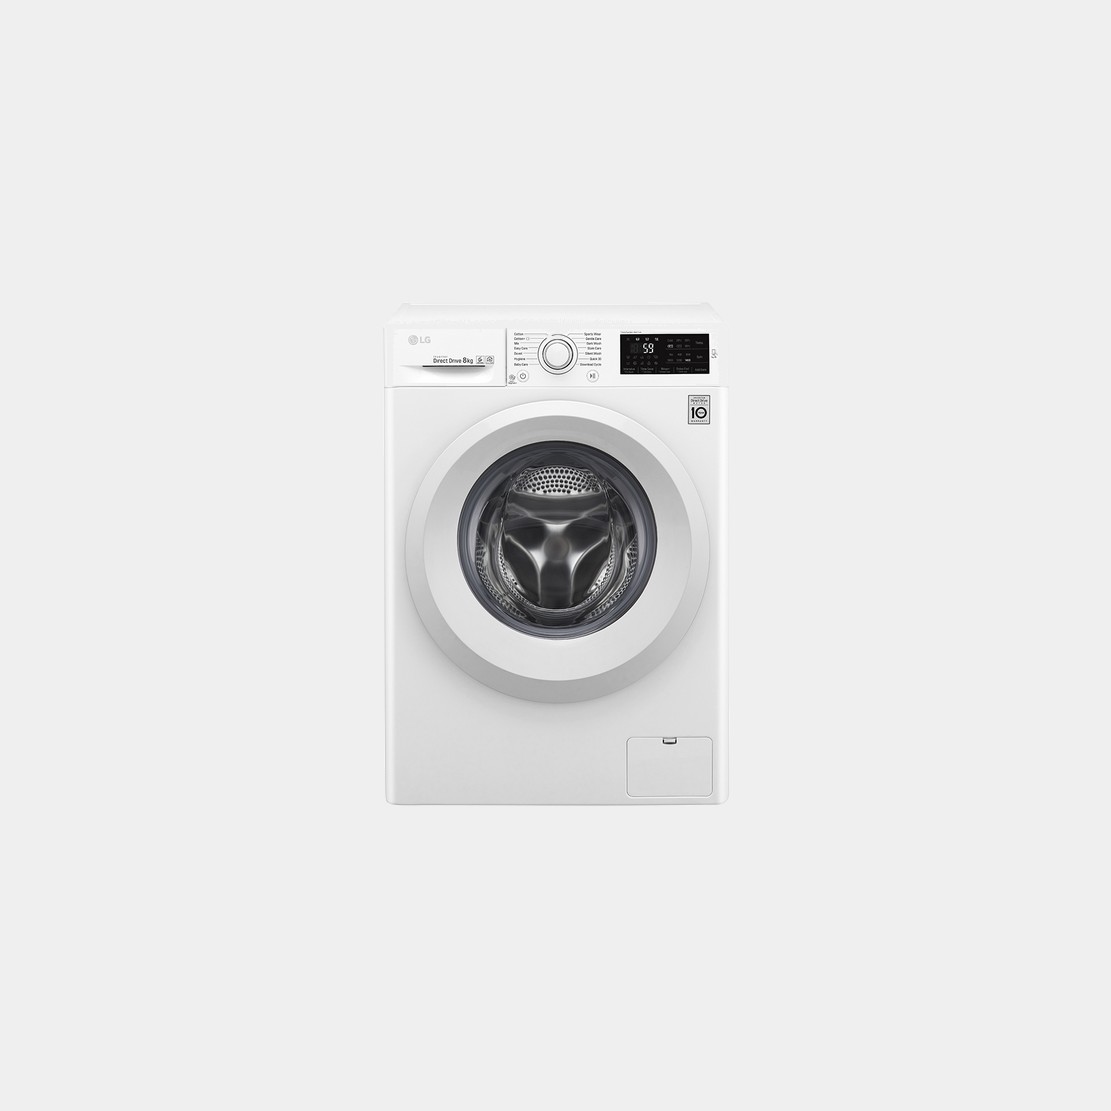 LG F4j5tn3w lavadora de 8kg y 1400 rpm